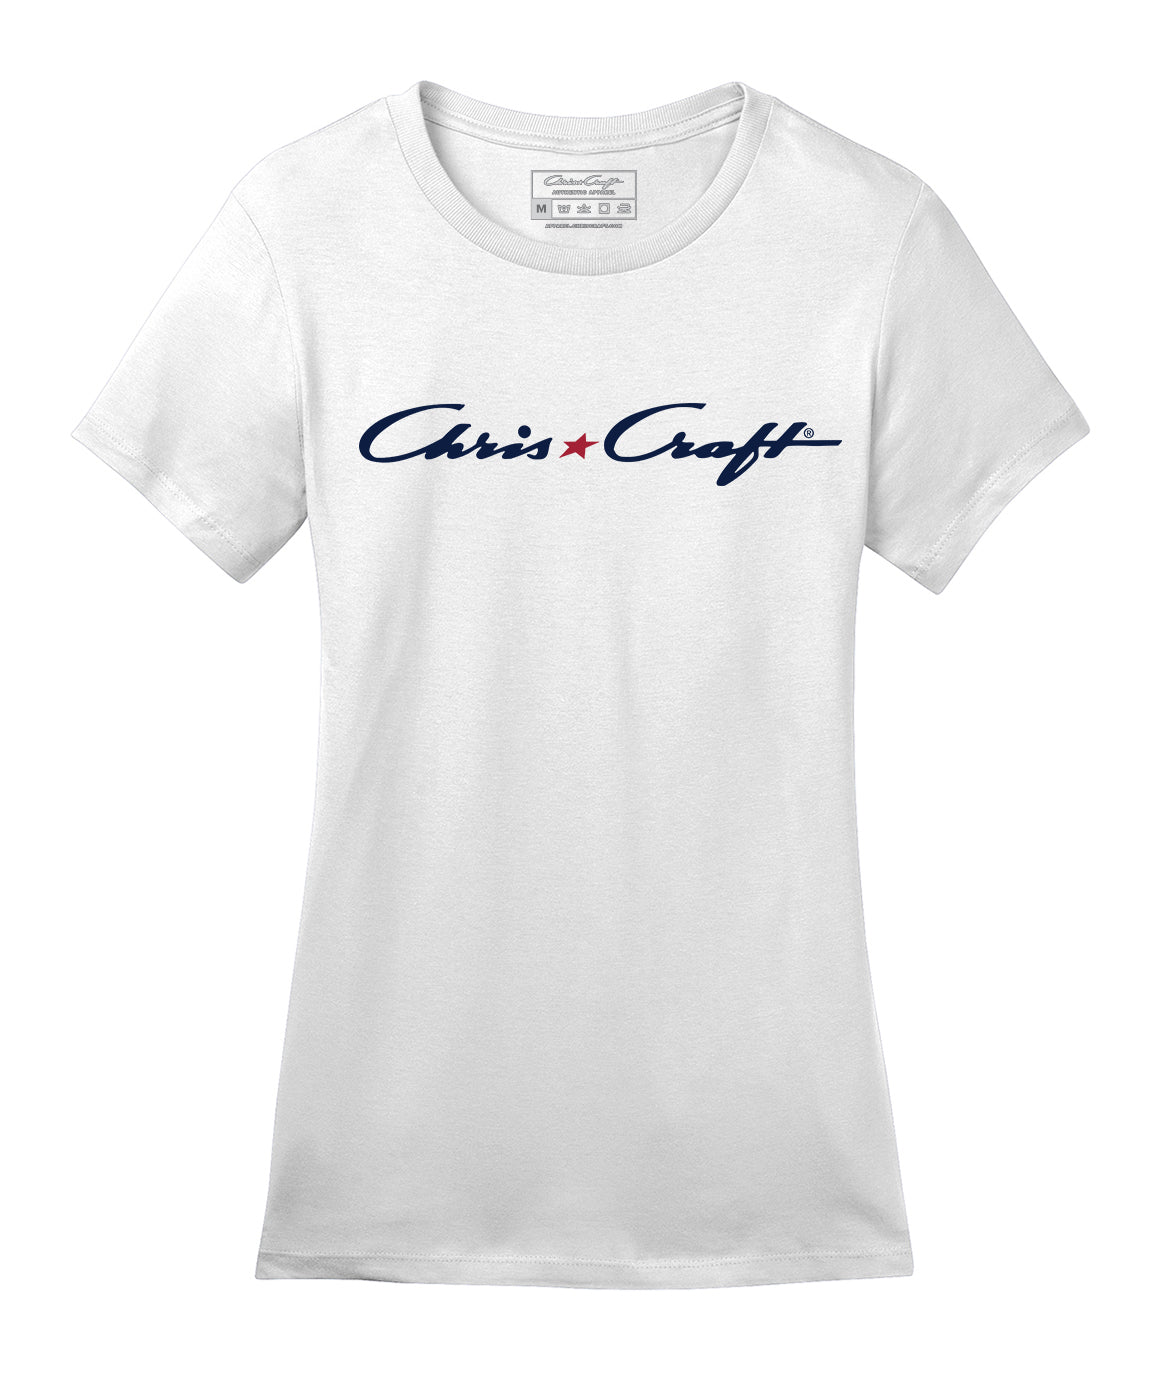 Chris-Craft Paramount Women's T-Shirt